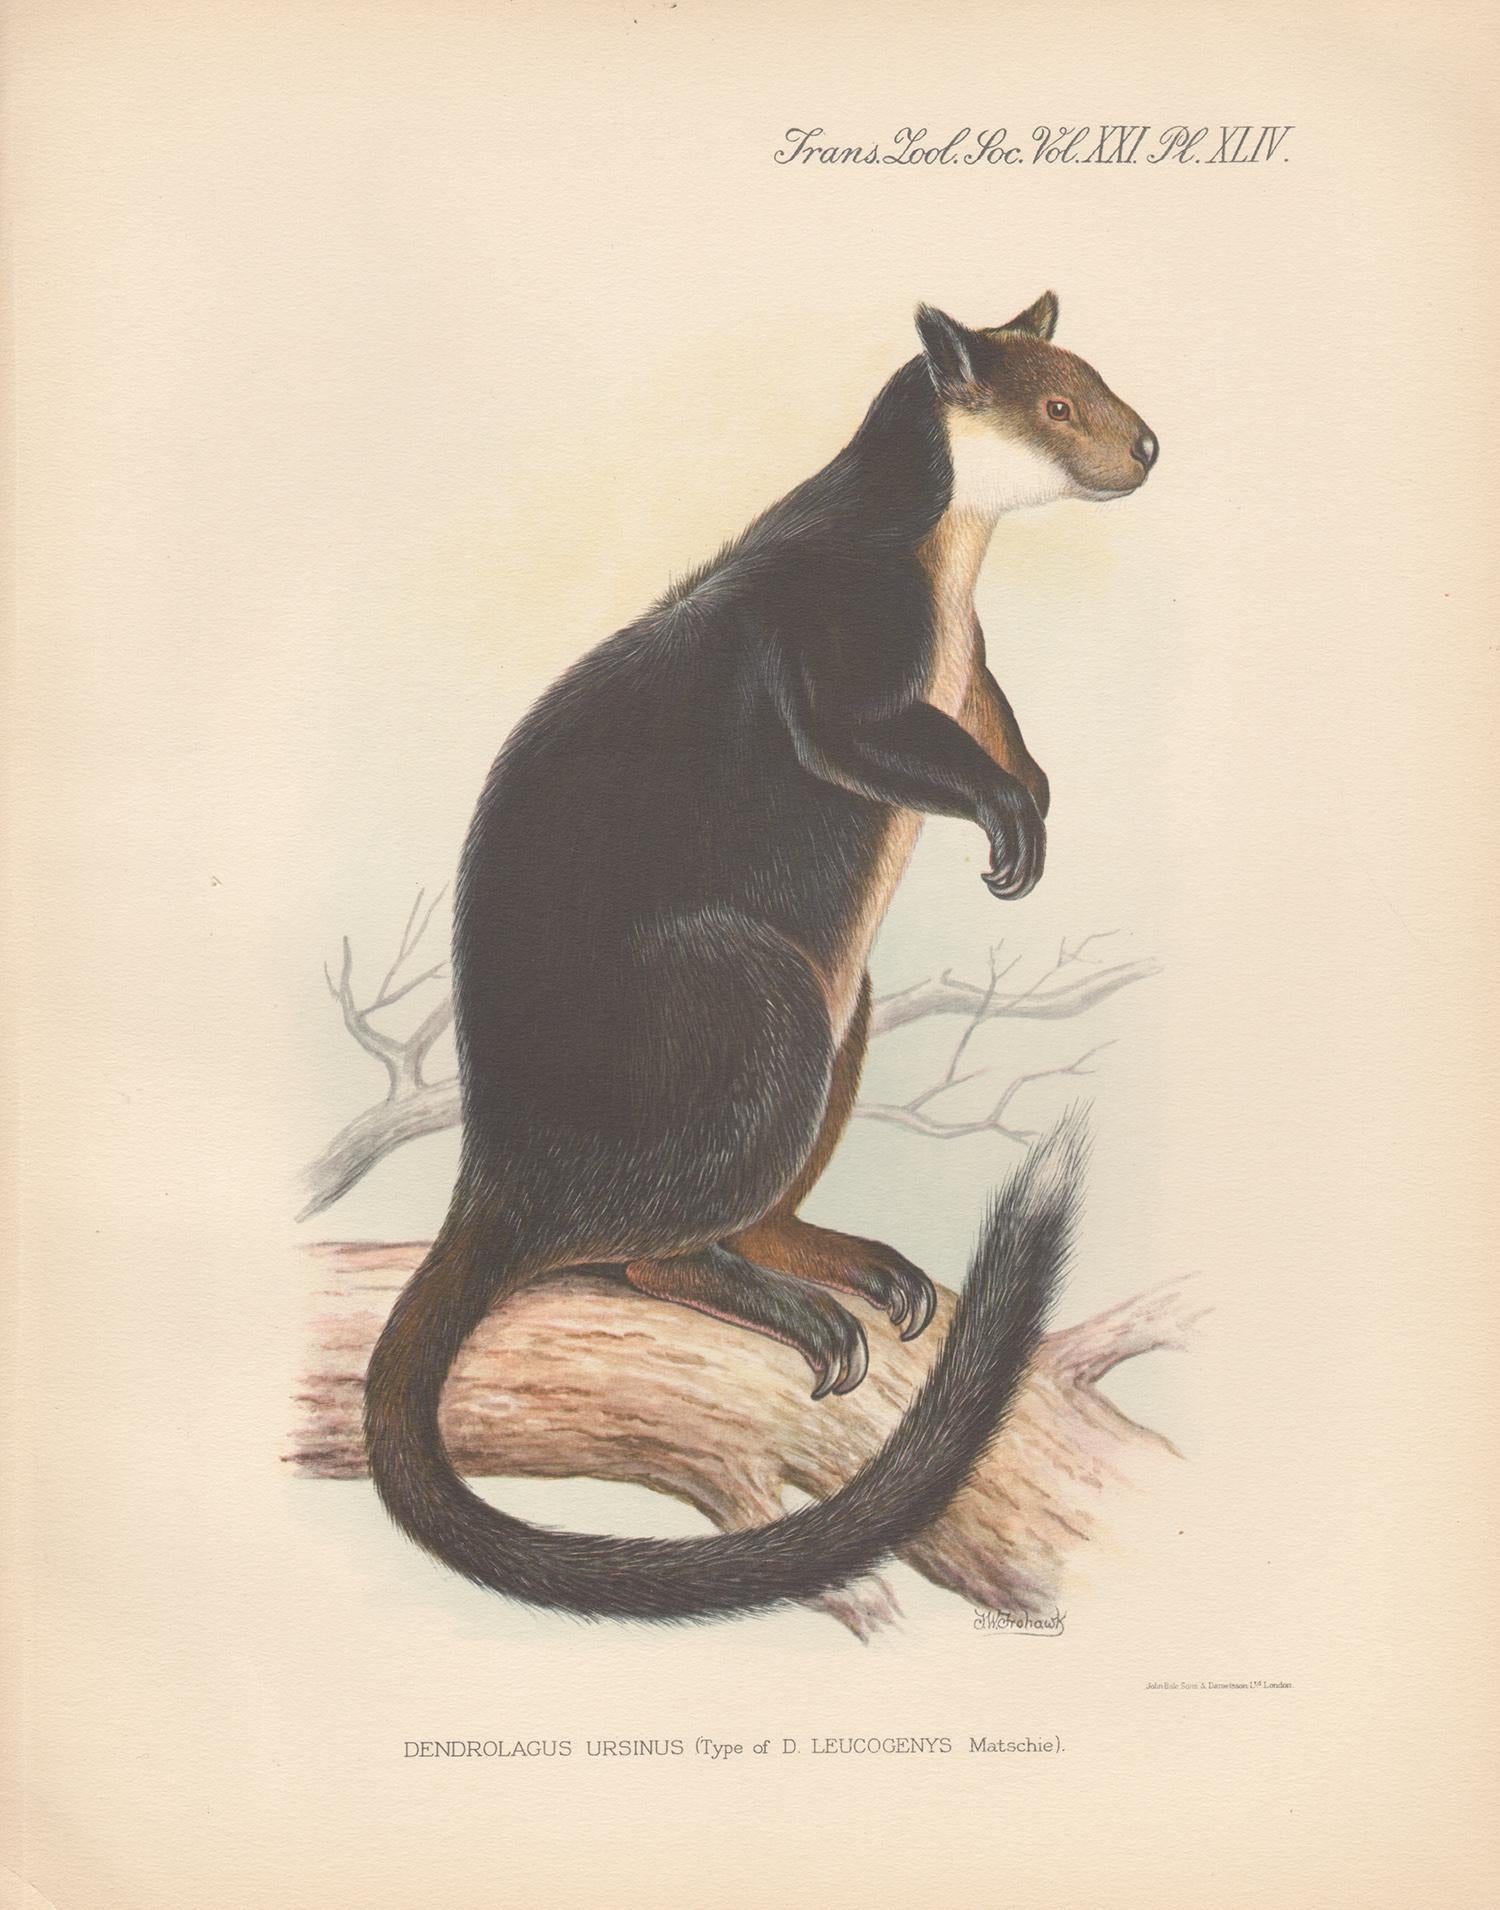 Frederick William Frohawk Animal Print - Black Tree Kangaroo, New Guinea, natural history lithograph, 1936